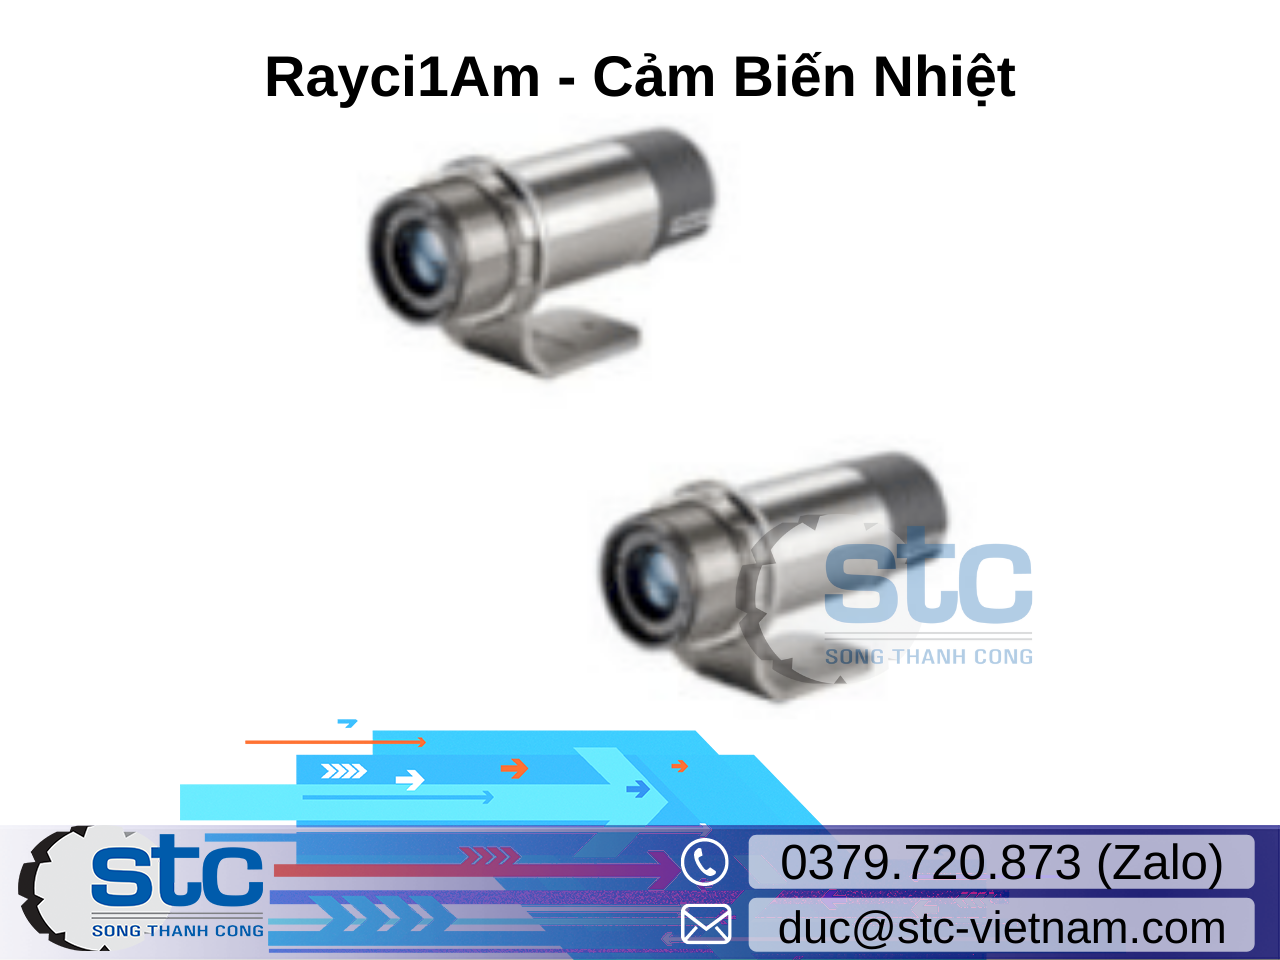 rayci1am-cam-bien-nhiet-12-24vdc-raytek-fluke-vietnam.png